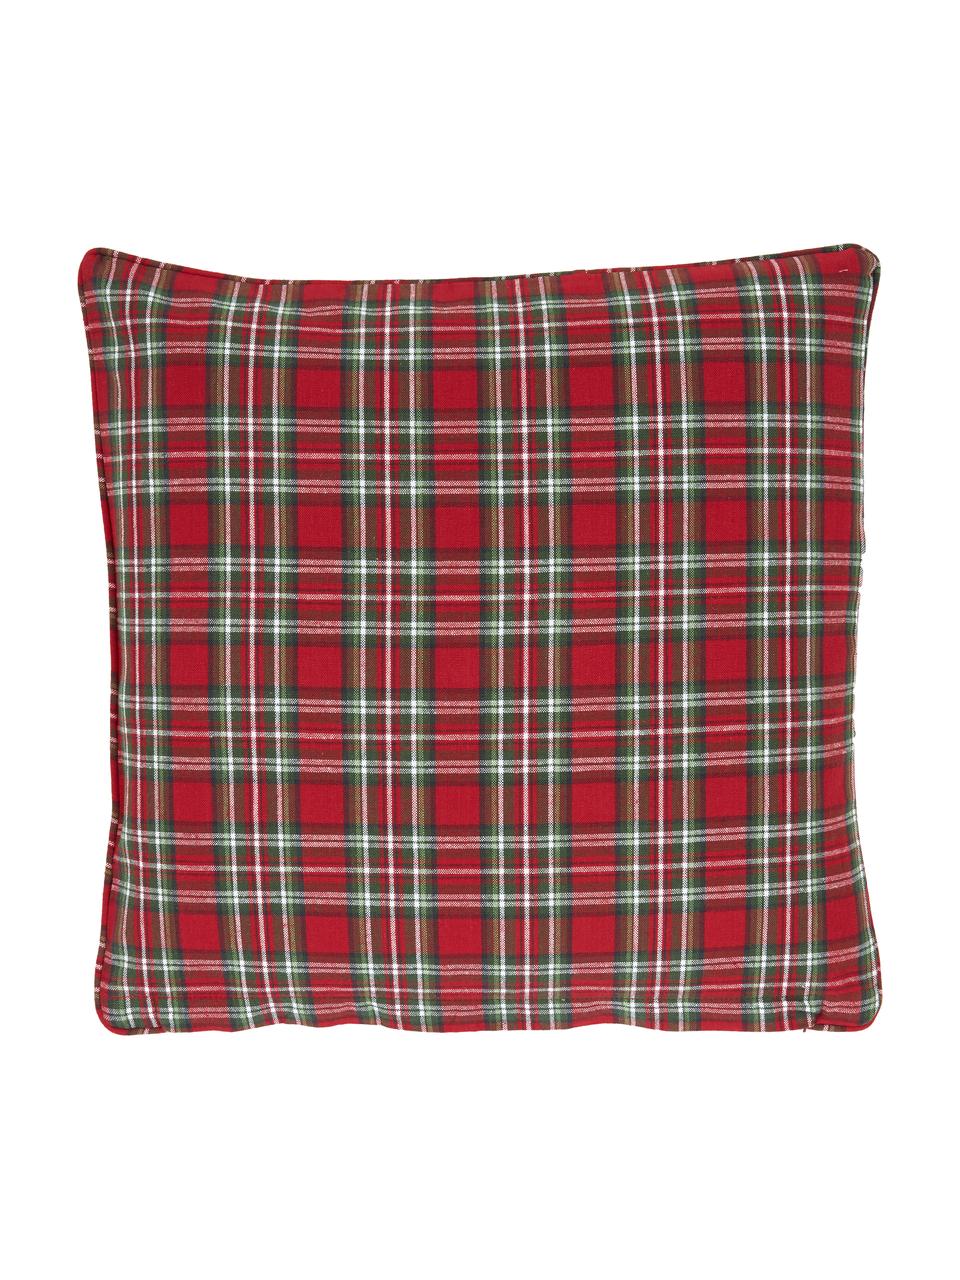 Funda de cojín doble cara bordada Chilly, 100% algodón, Beige, rojo, verde, An 45 x L 45 cm